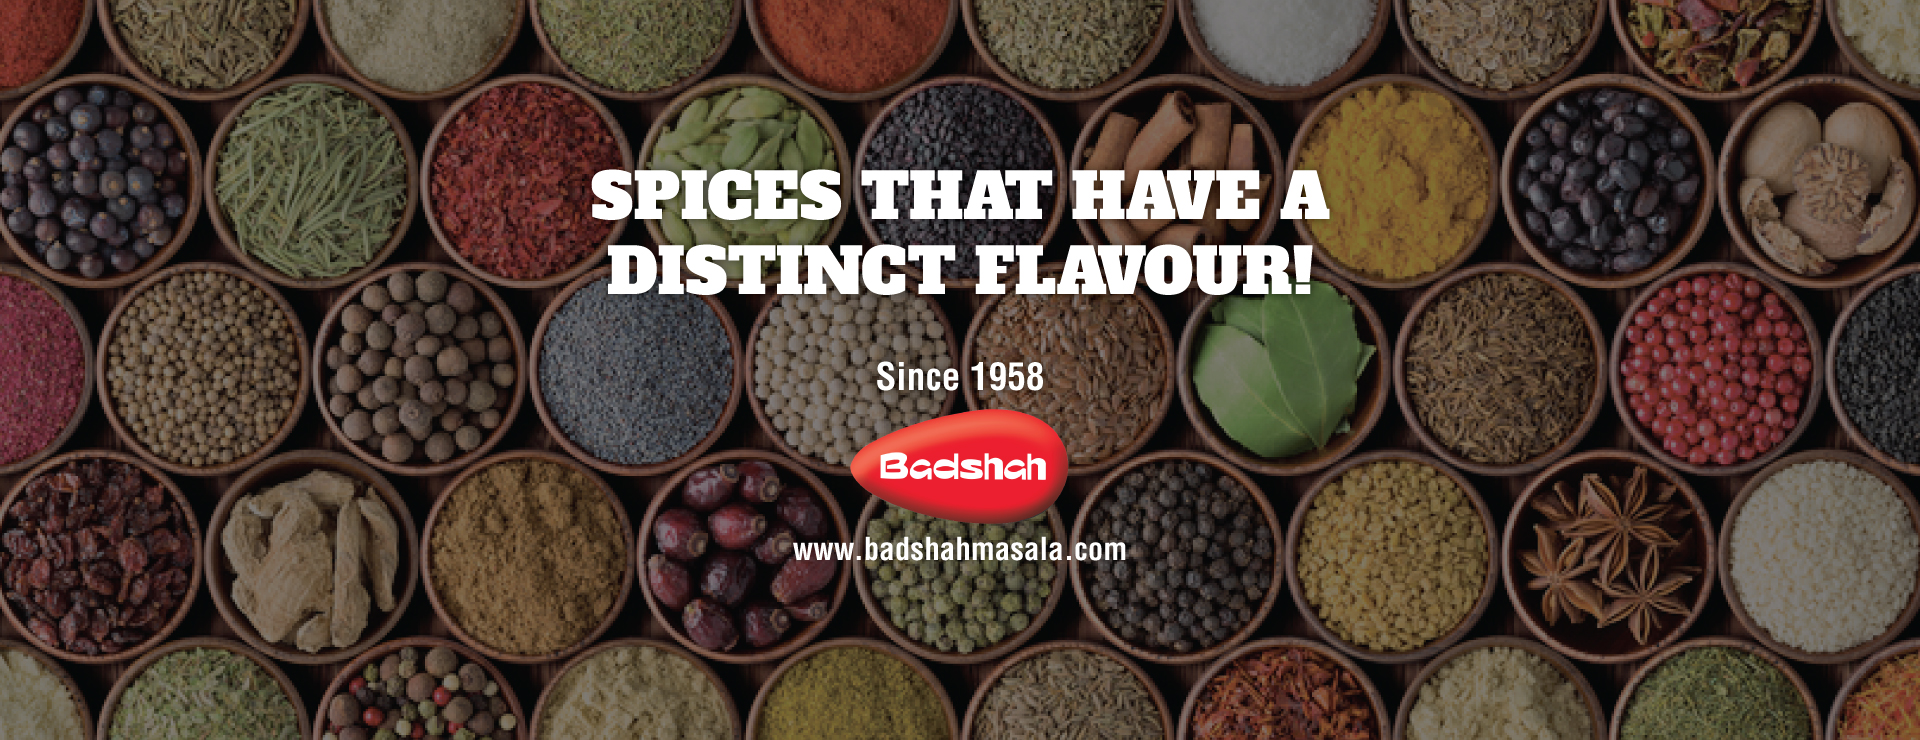 Spices that have a distinct flavour